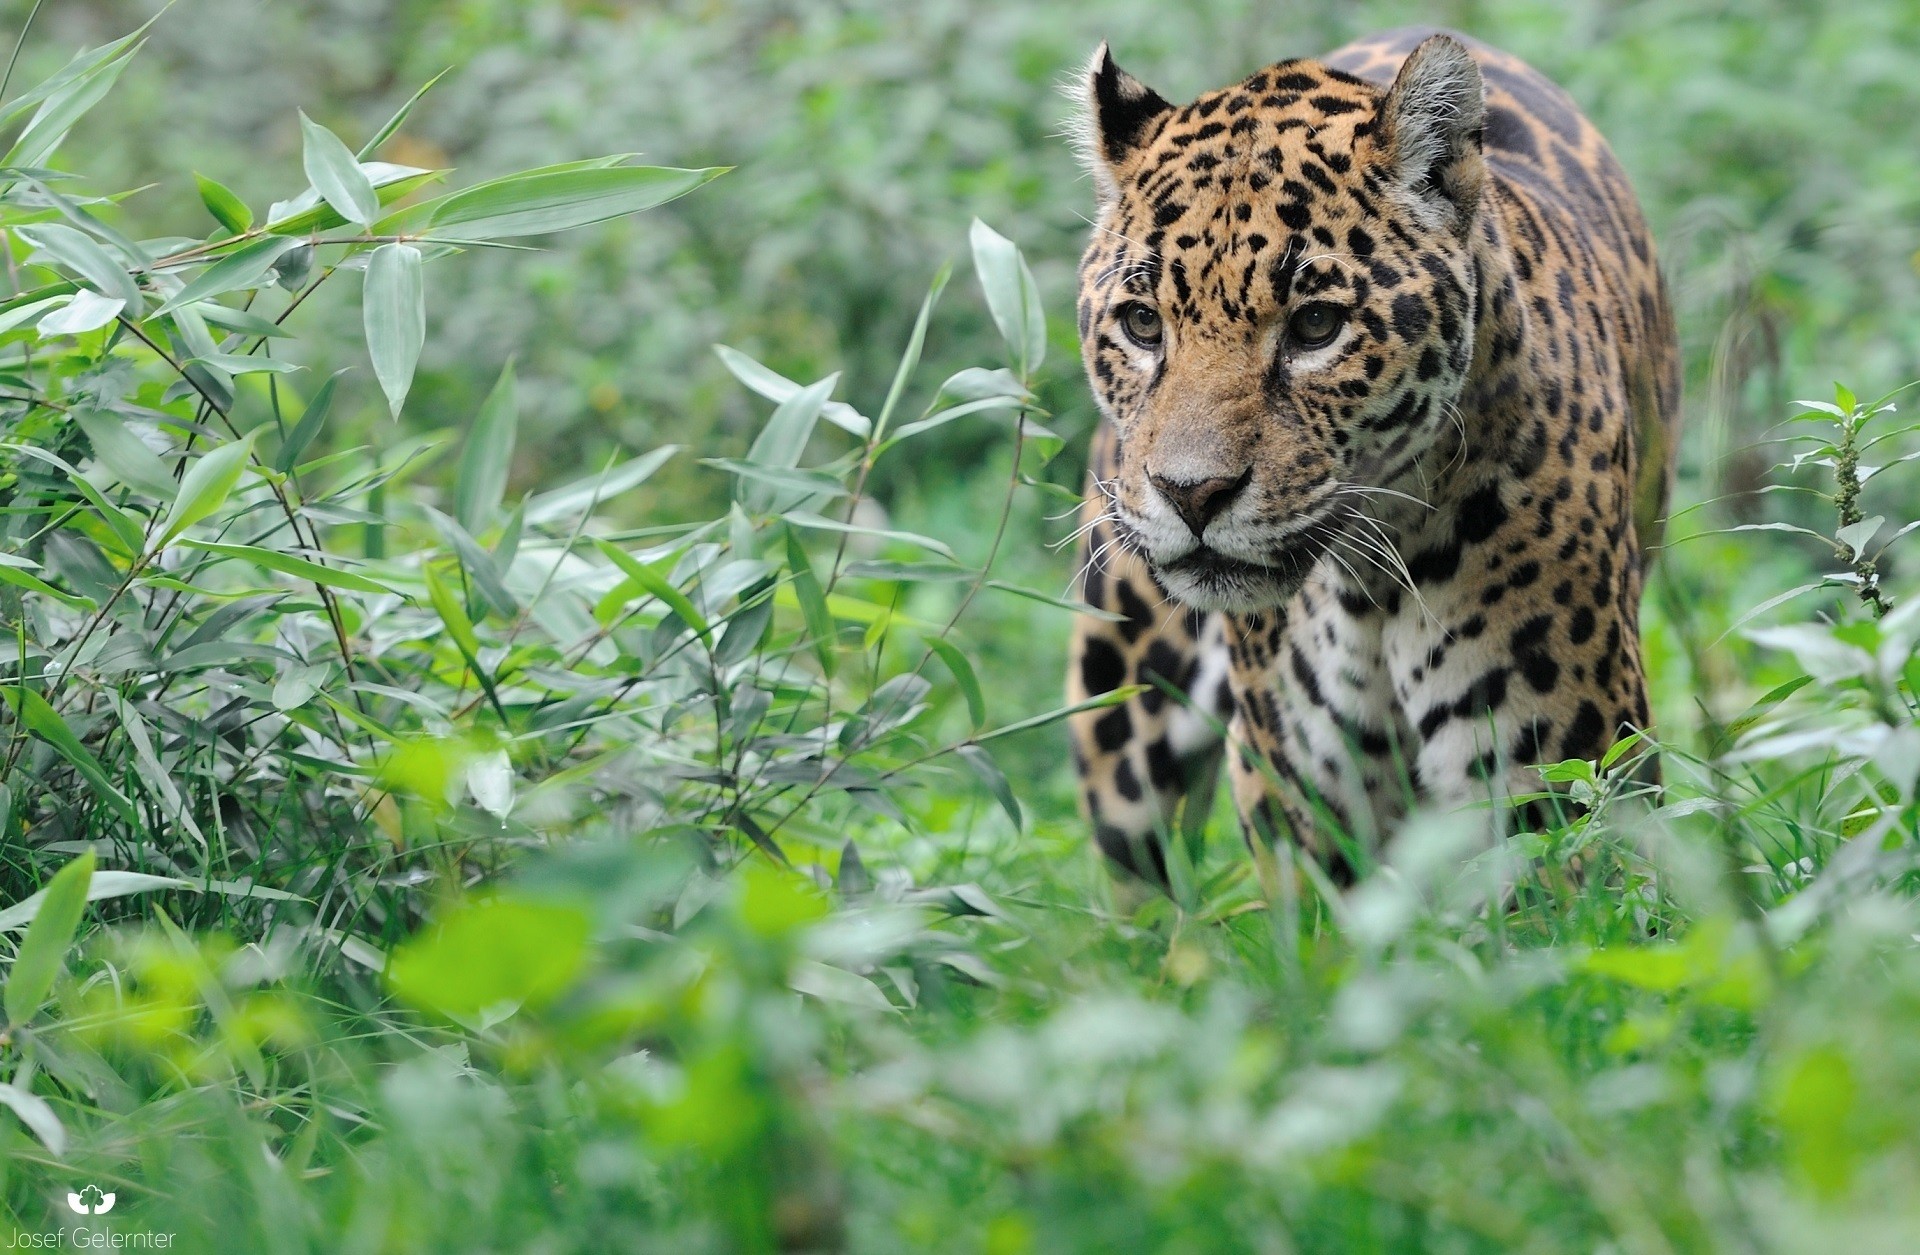 General 1920x1255 animals feline leopard bushes jaguars